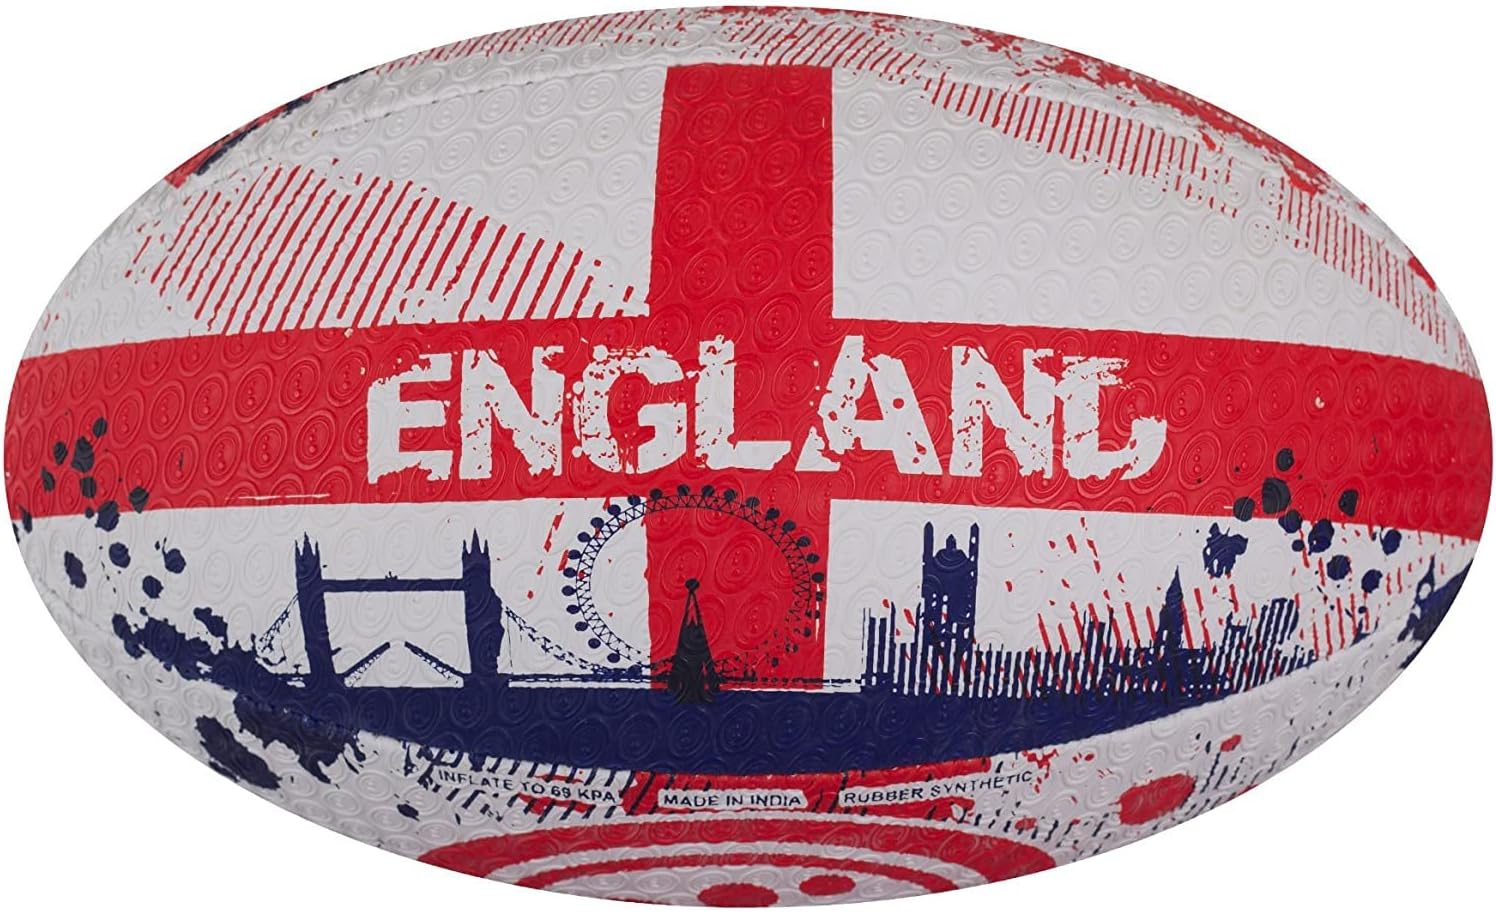 England Rugby Ball - Optimum